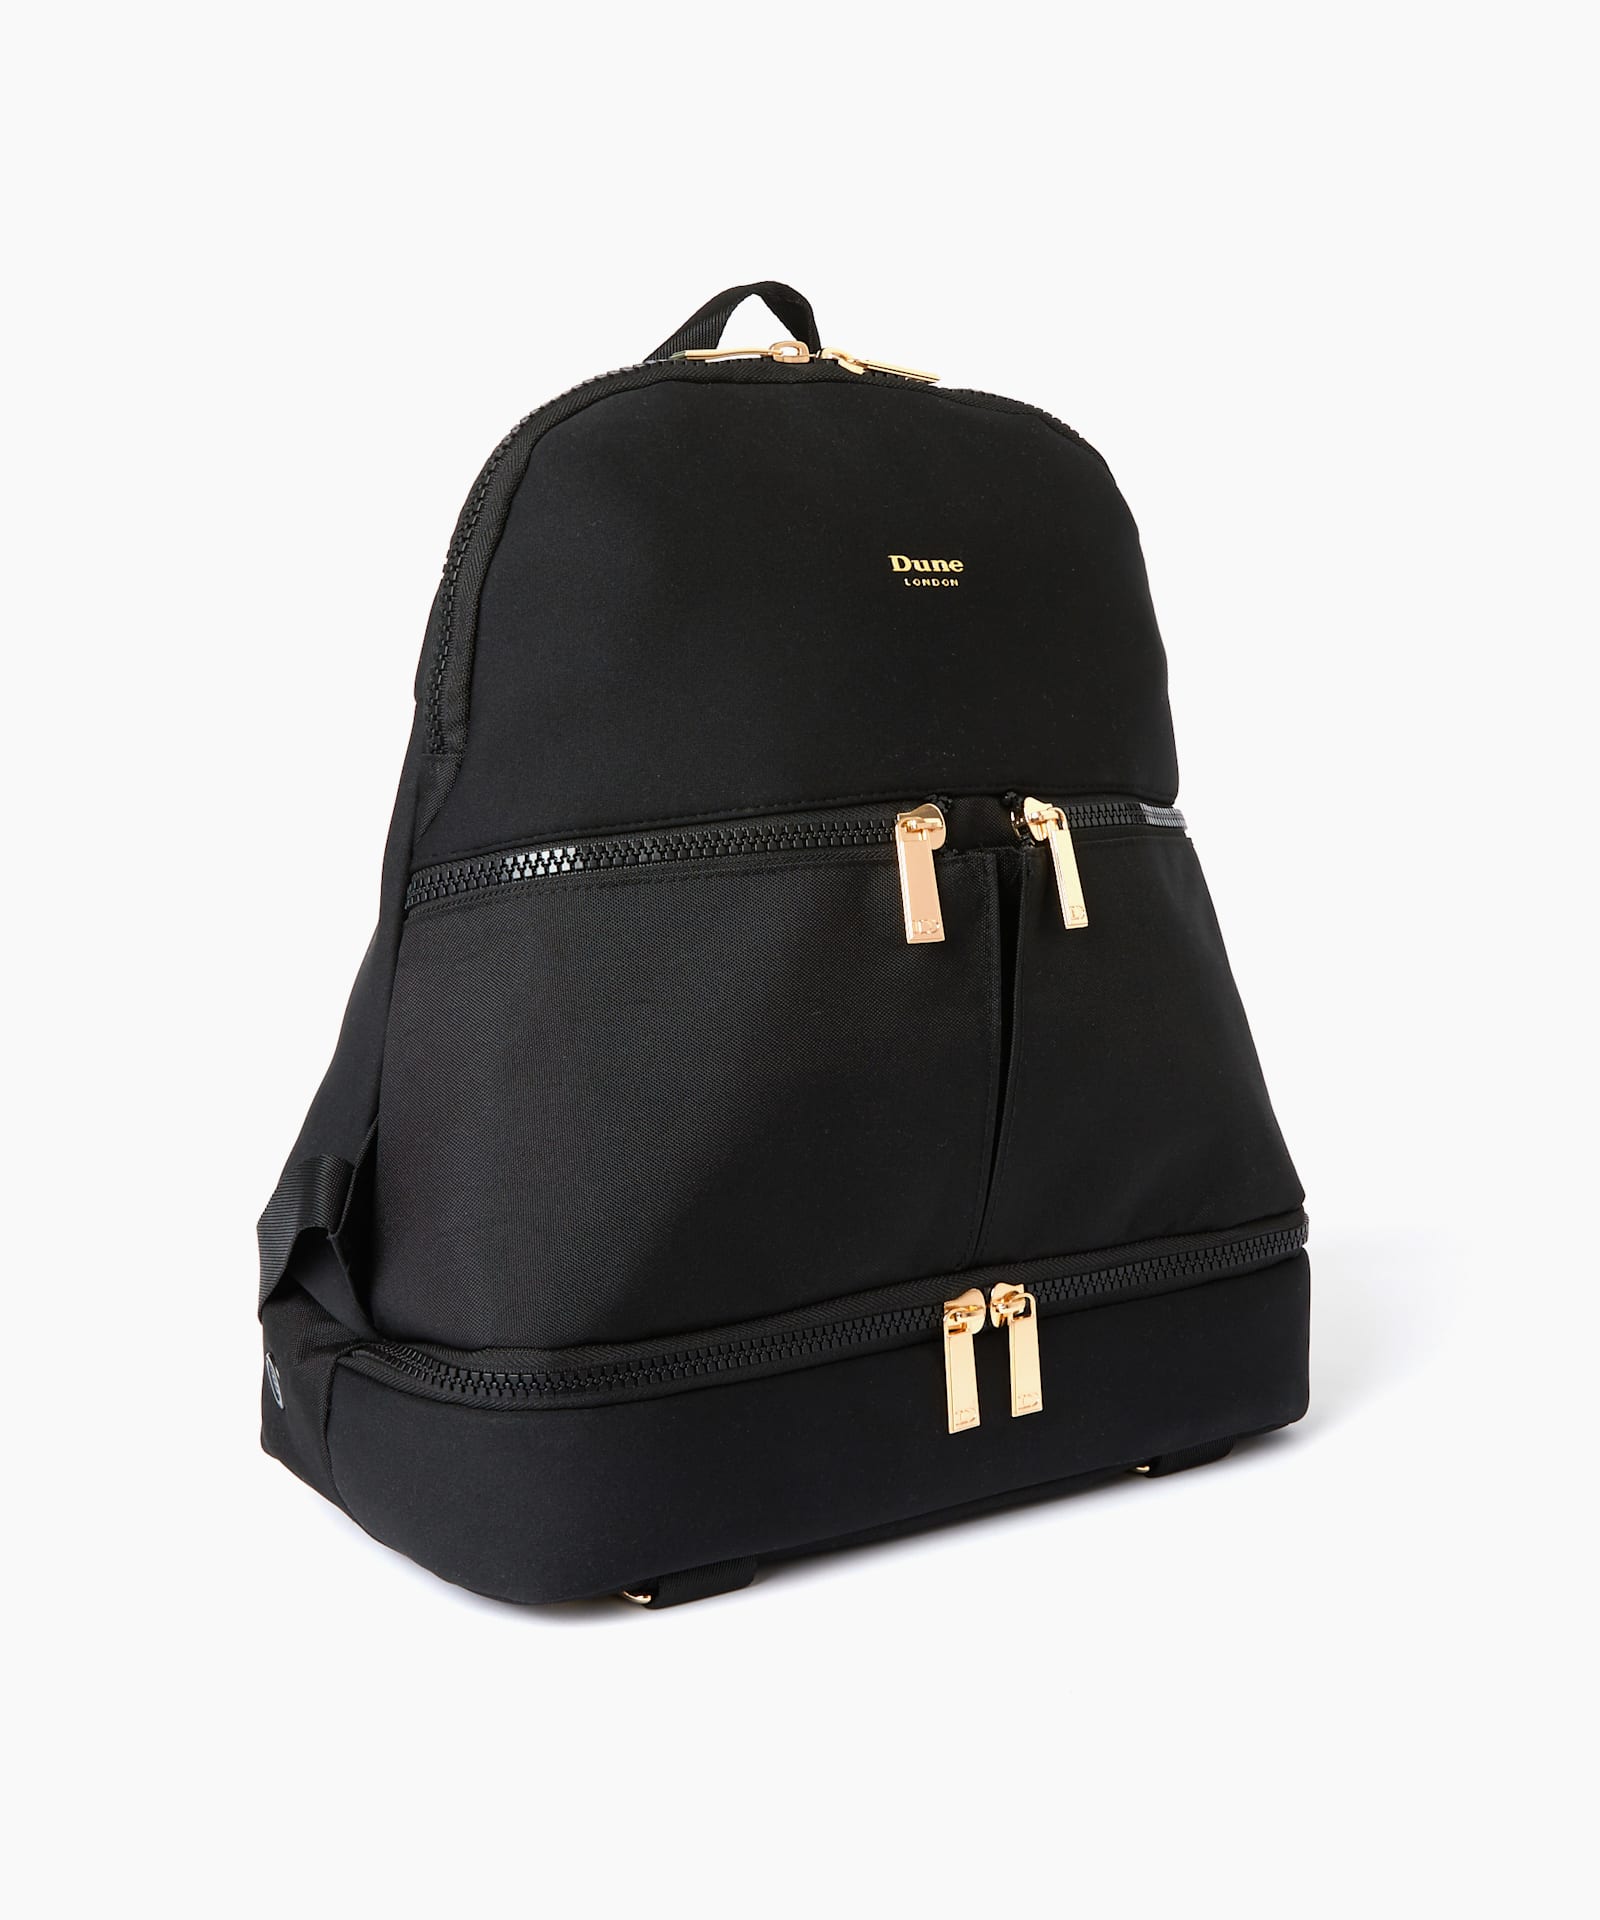 Oracle Backpack, Black, large